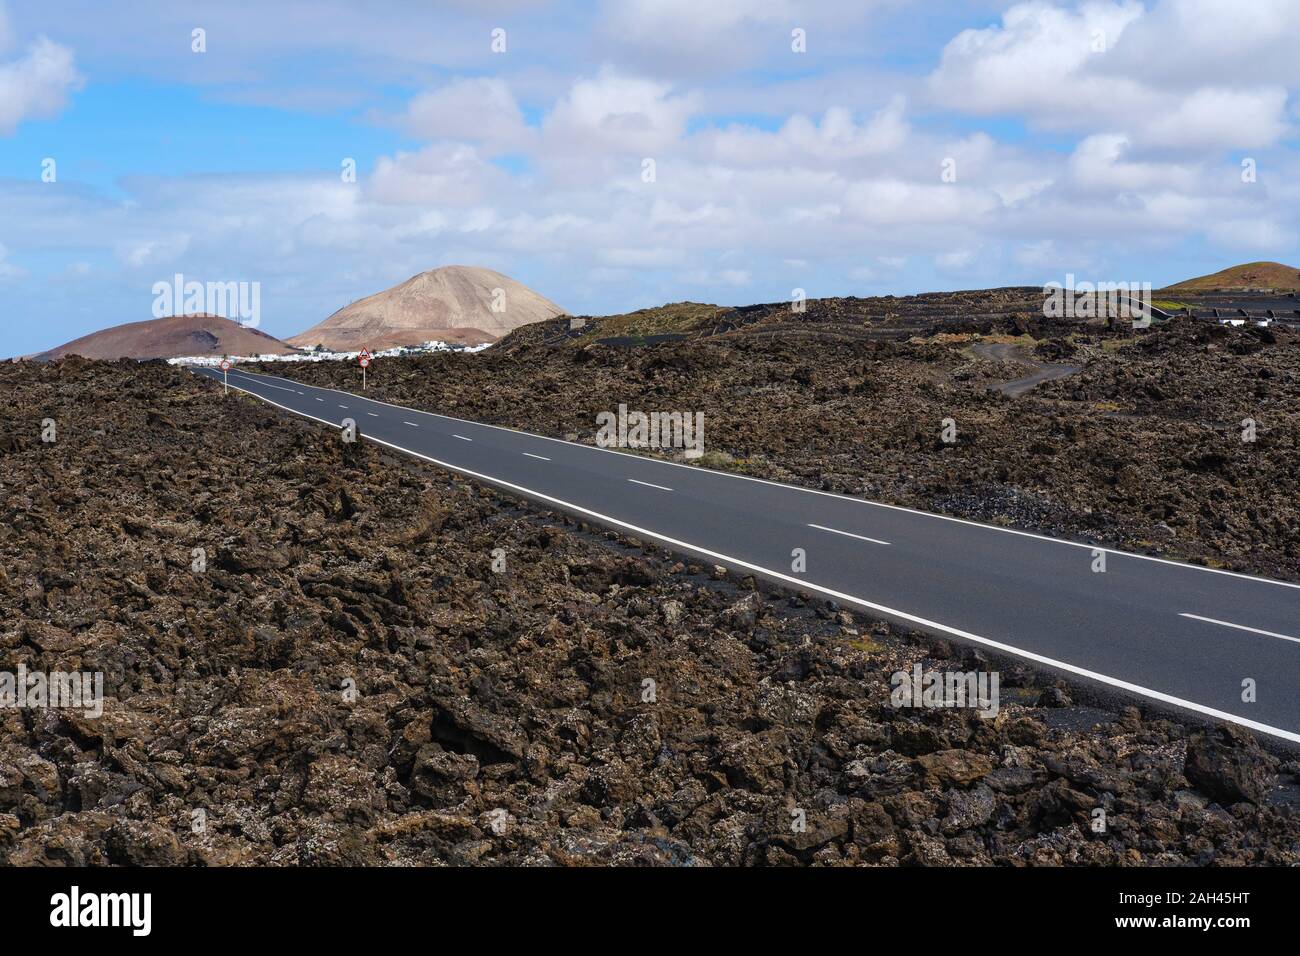 Spain, Canary Islands, Lanzarote, Mancha Blanca, Country road crossing lava field Stock Photo